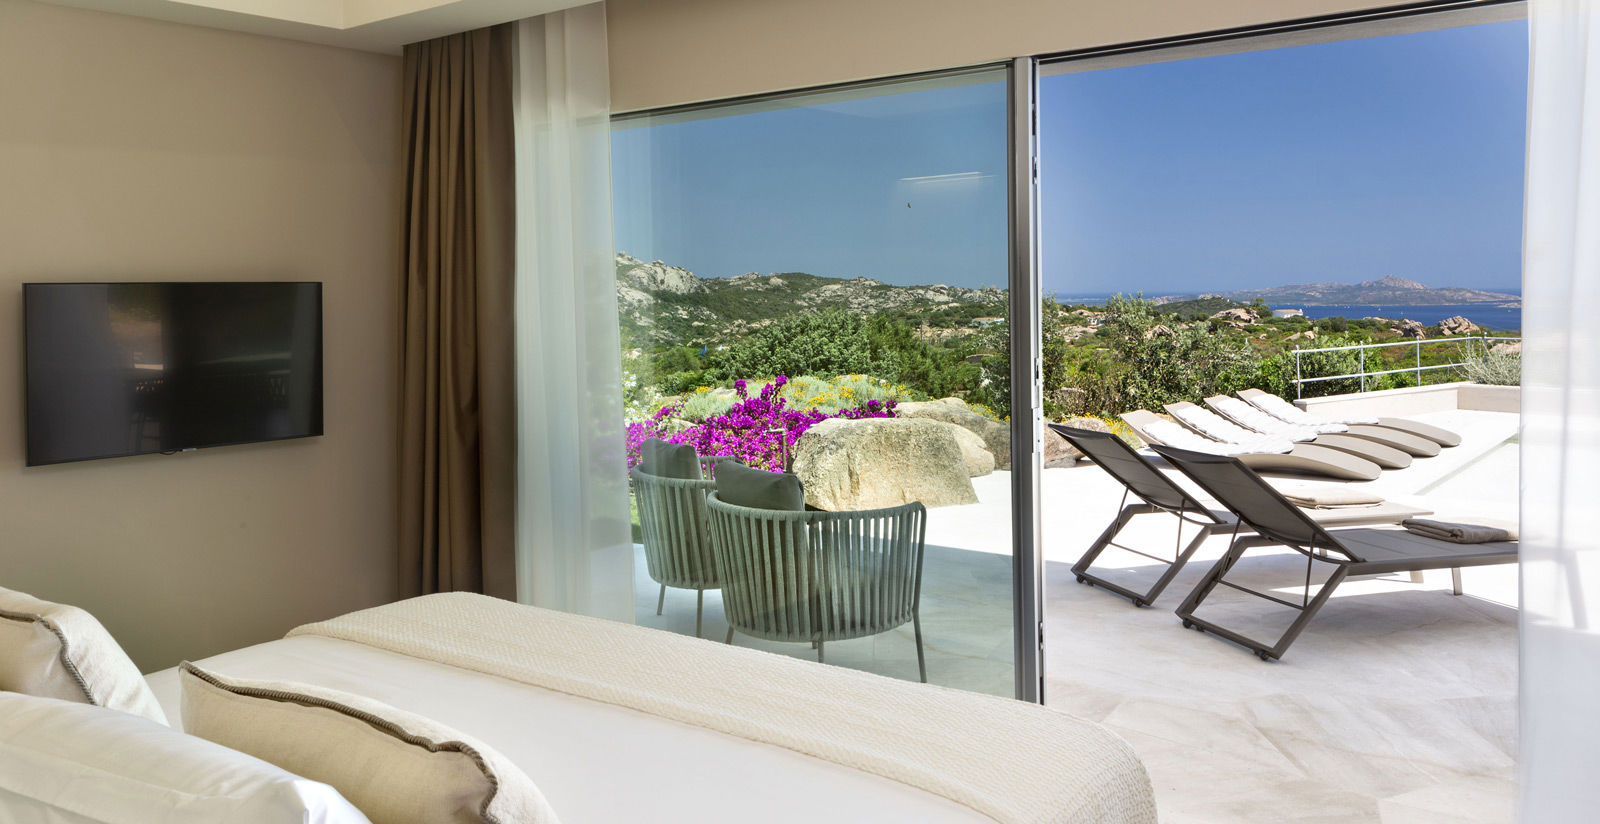 5-star hotel with seaside villas in Sardinia 12